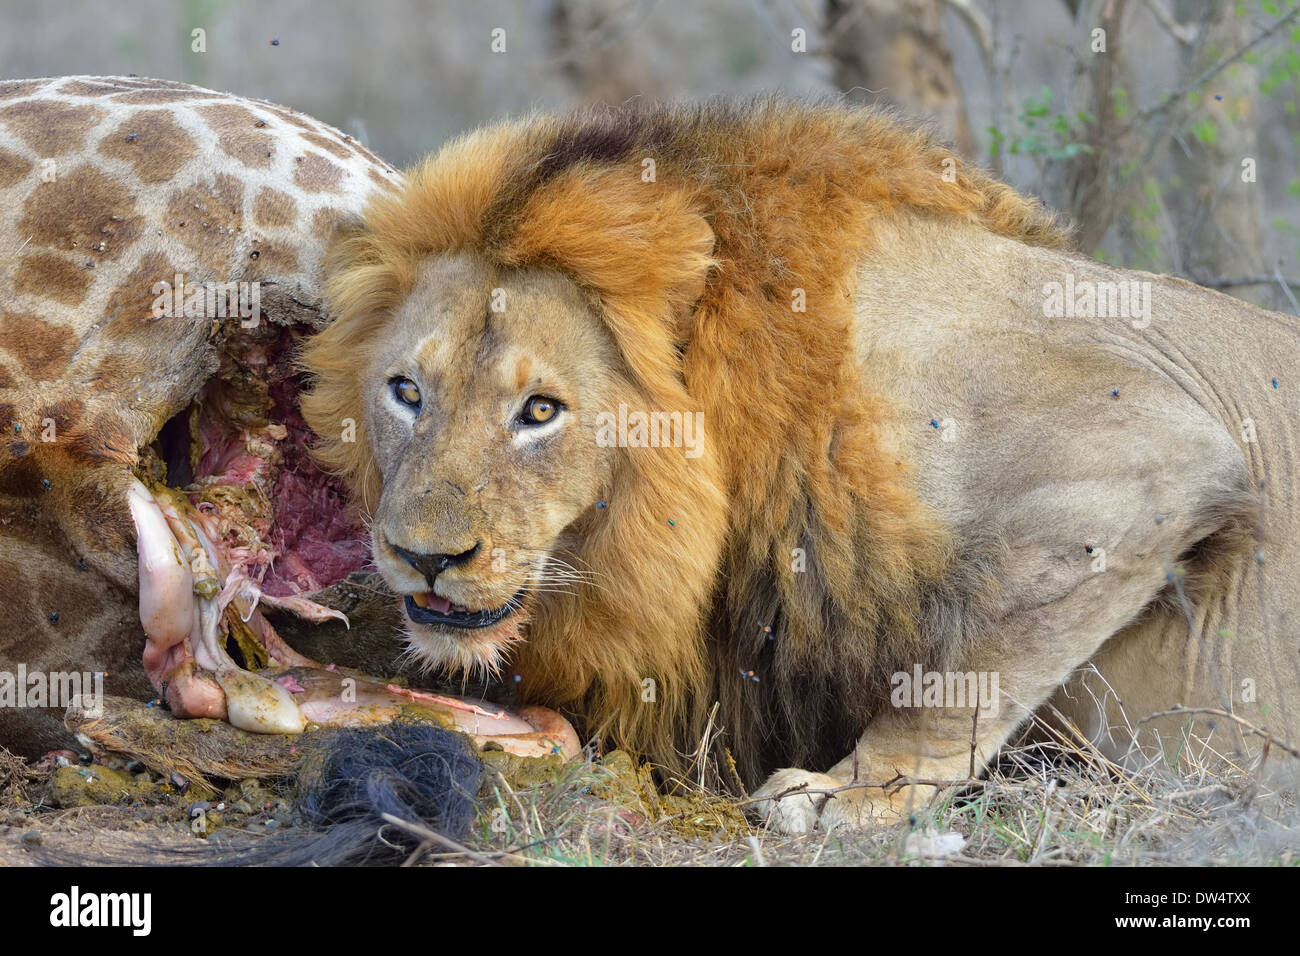 Lion (Panthera leo) eating a giraffe (Giraffa camelopardalis), Kruger National Park, South Africa, Africa Stock Photo